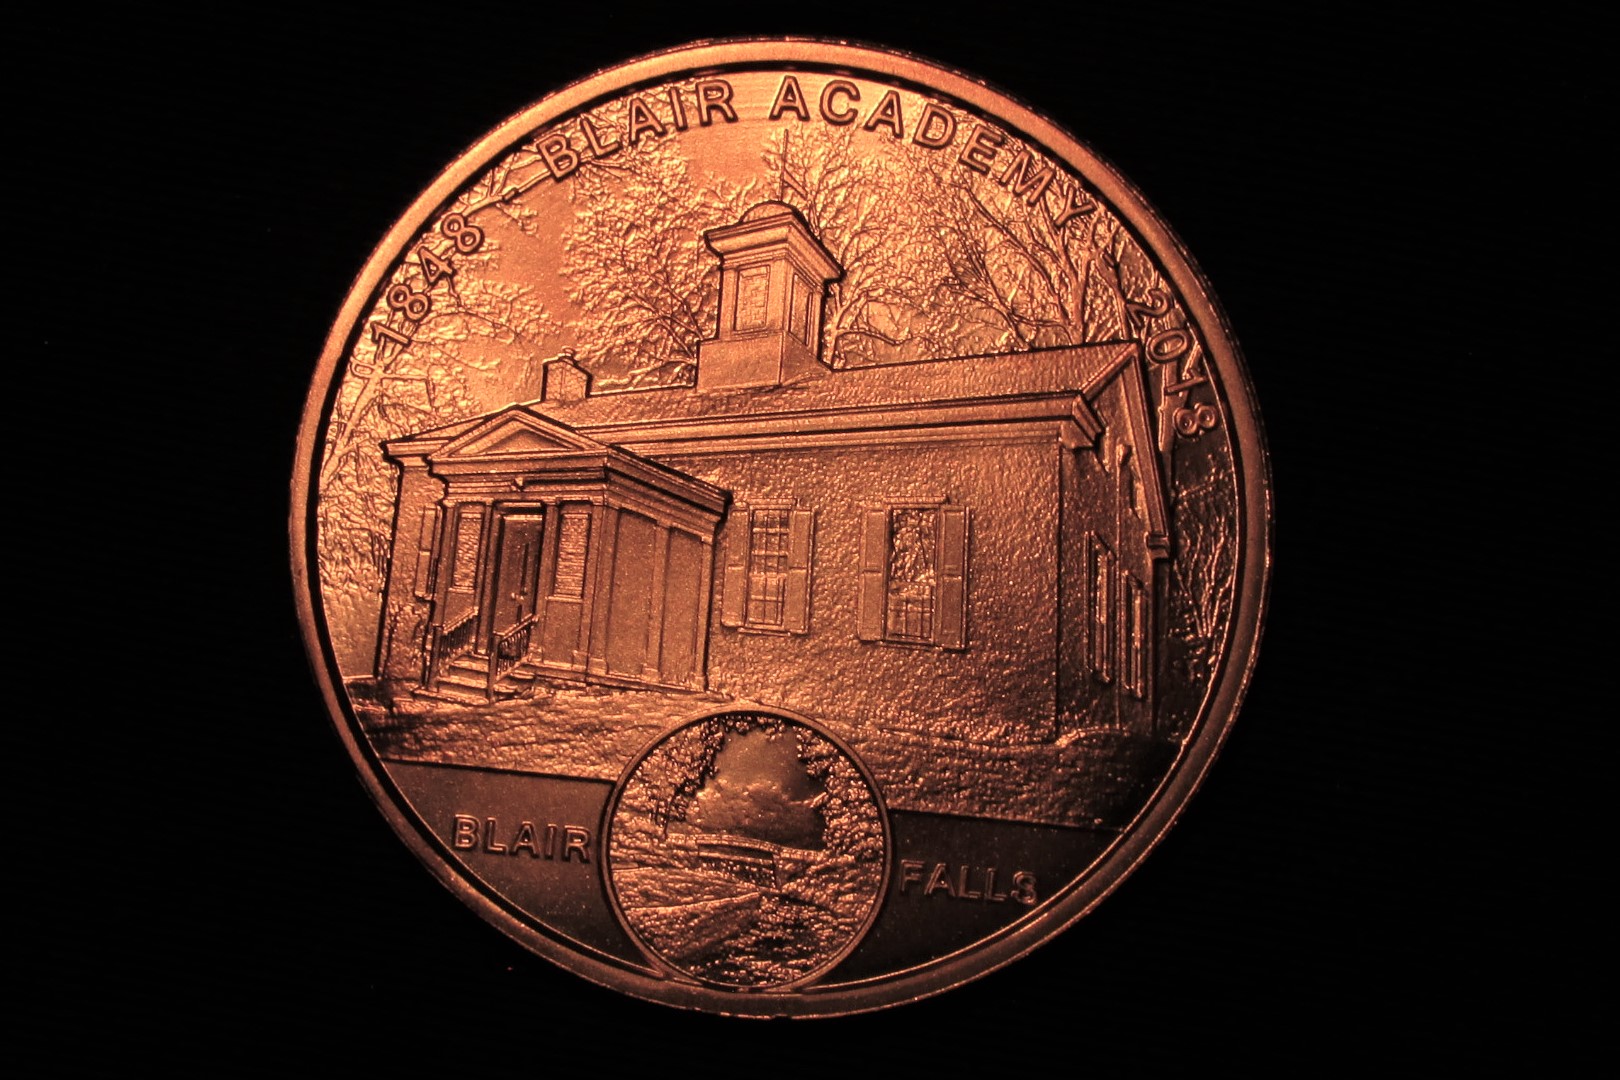 2018 Blair Academy 170th Anniversary Medal (copper) - reverse.JPG